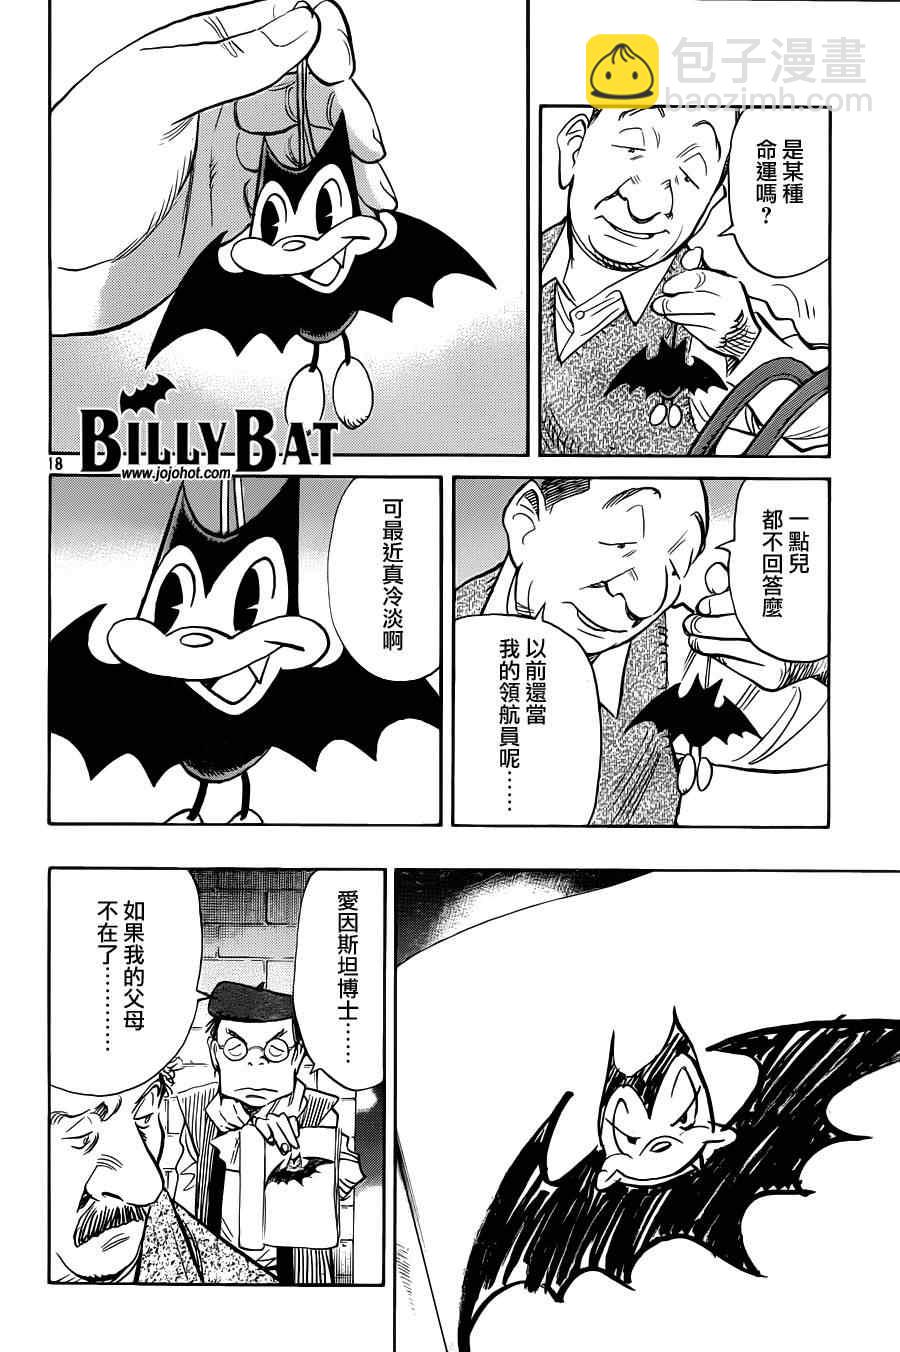 Billy_Bat - 第71話 - 3